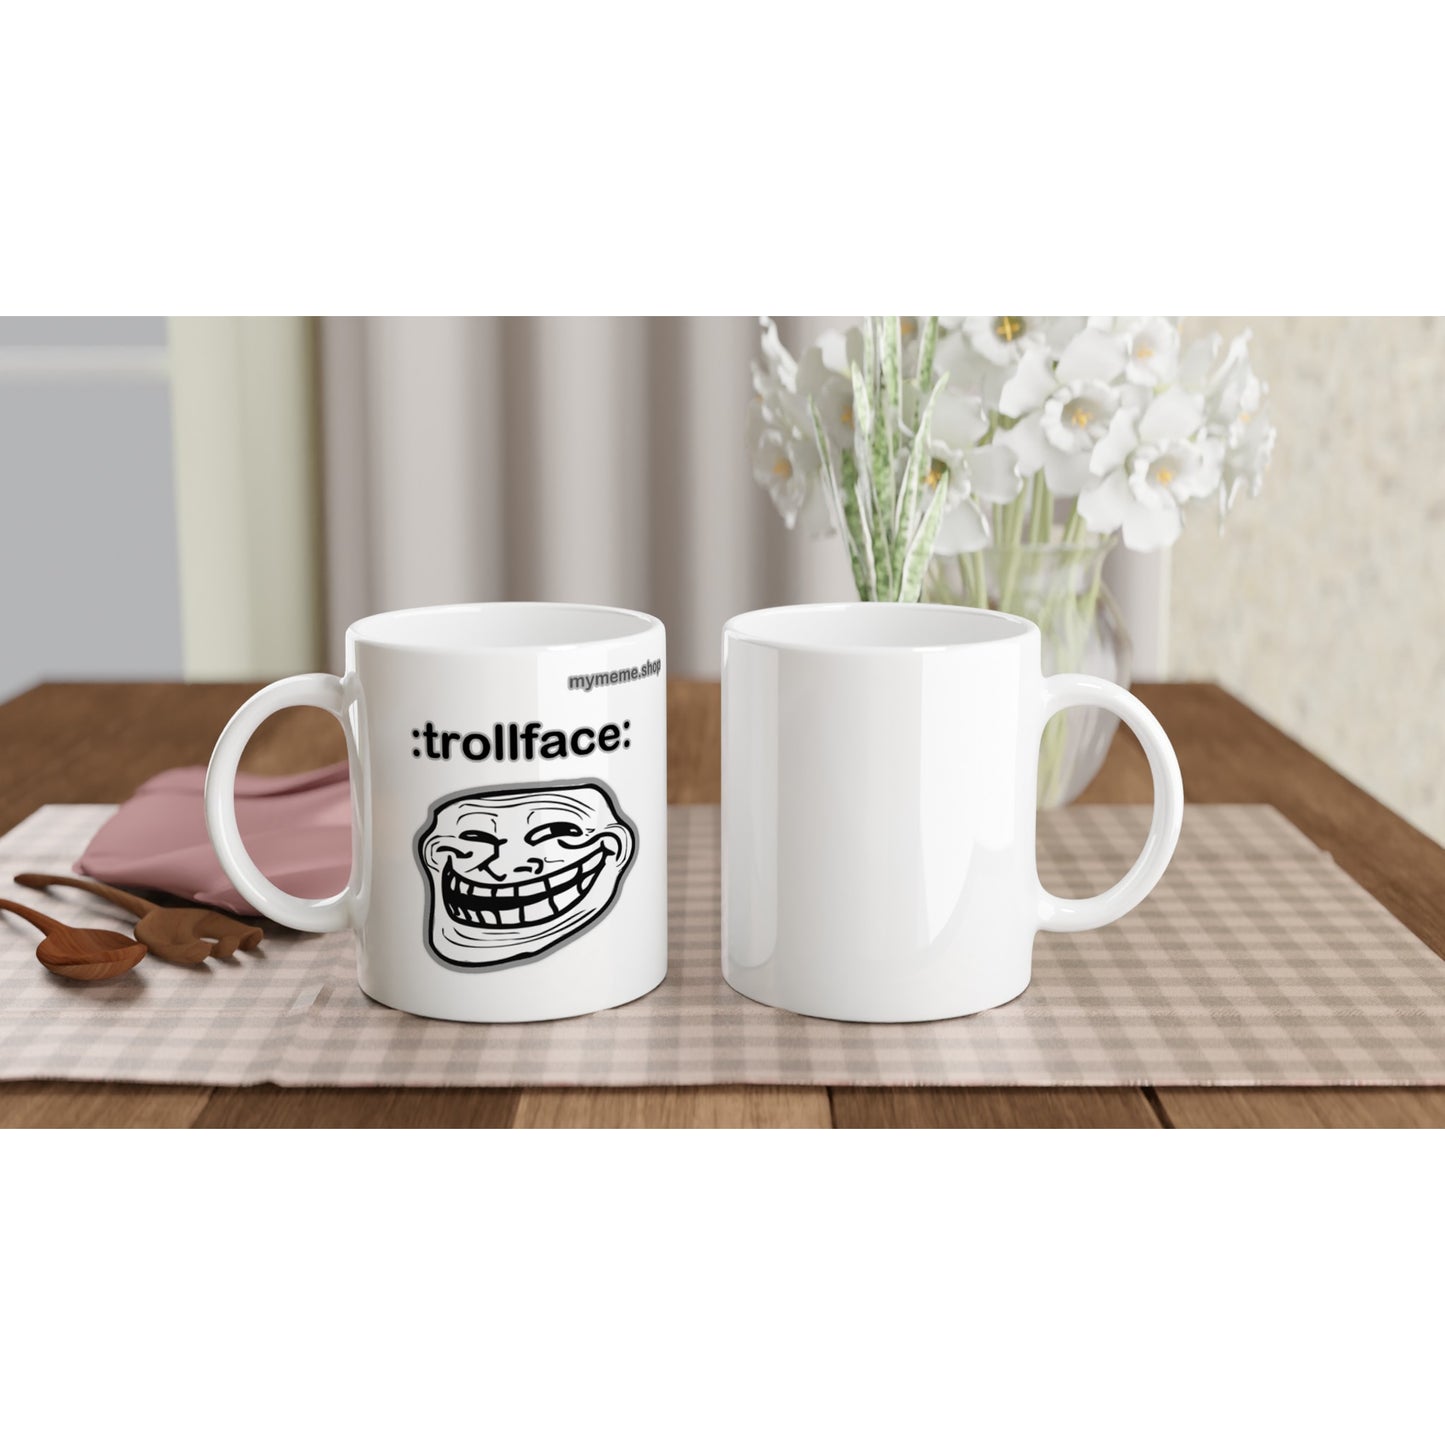 :trollface: Mug